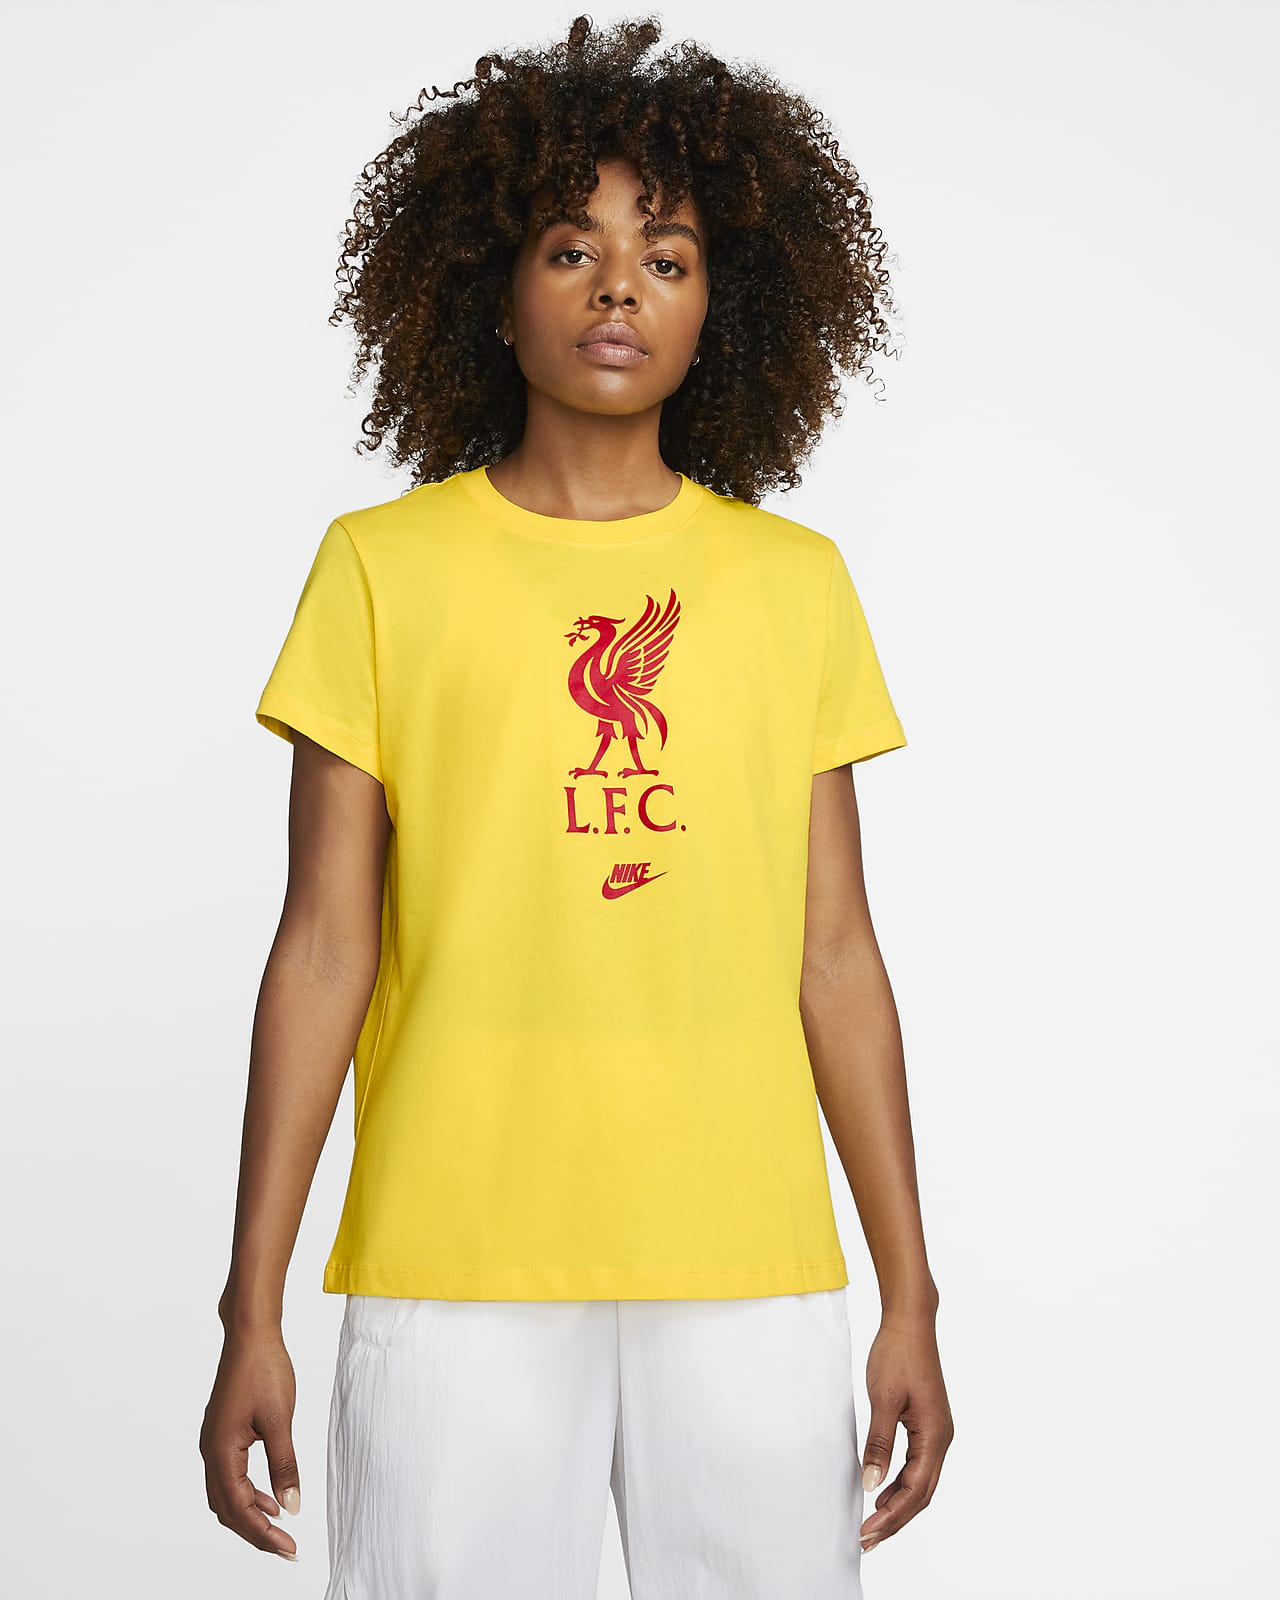 Liverpool FC Women's Nike.com